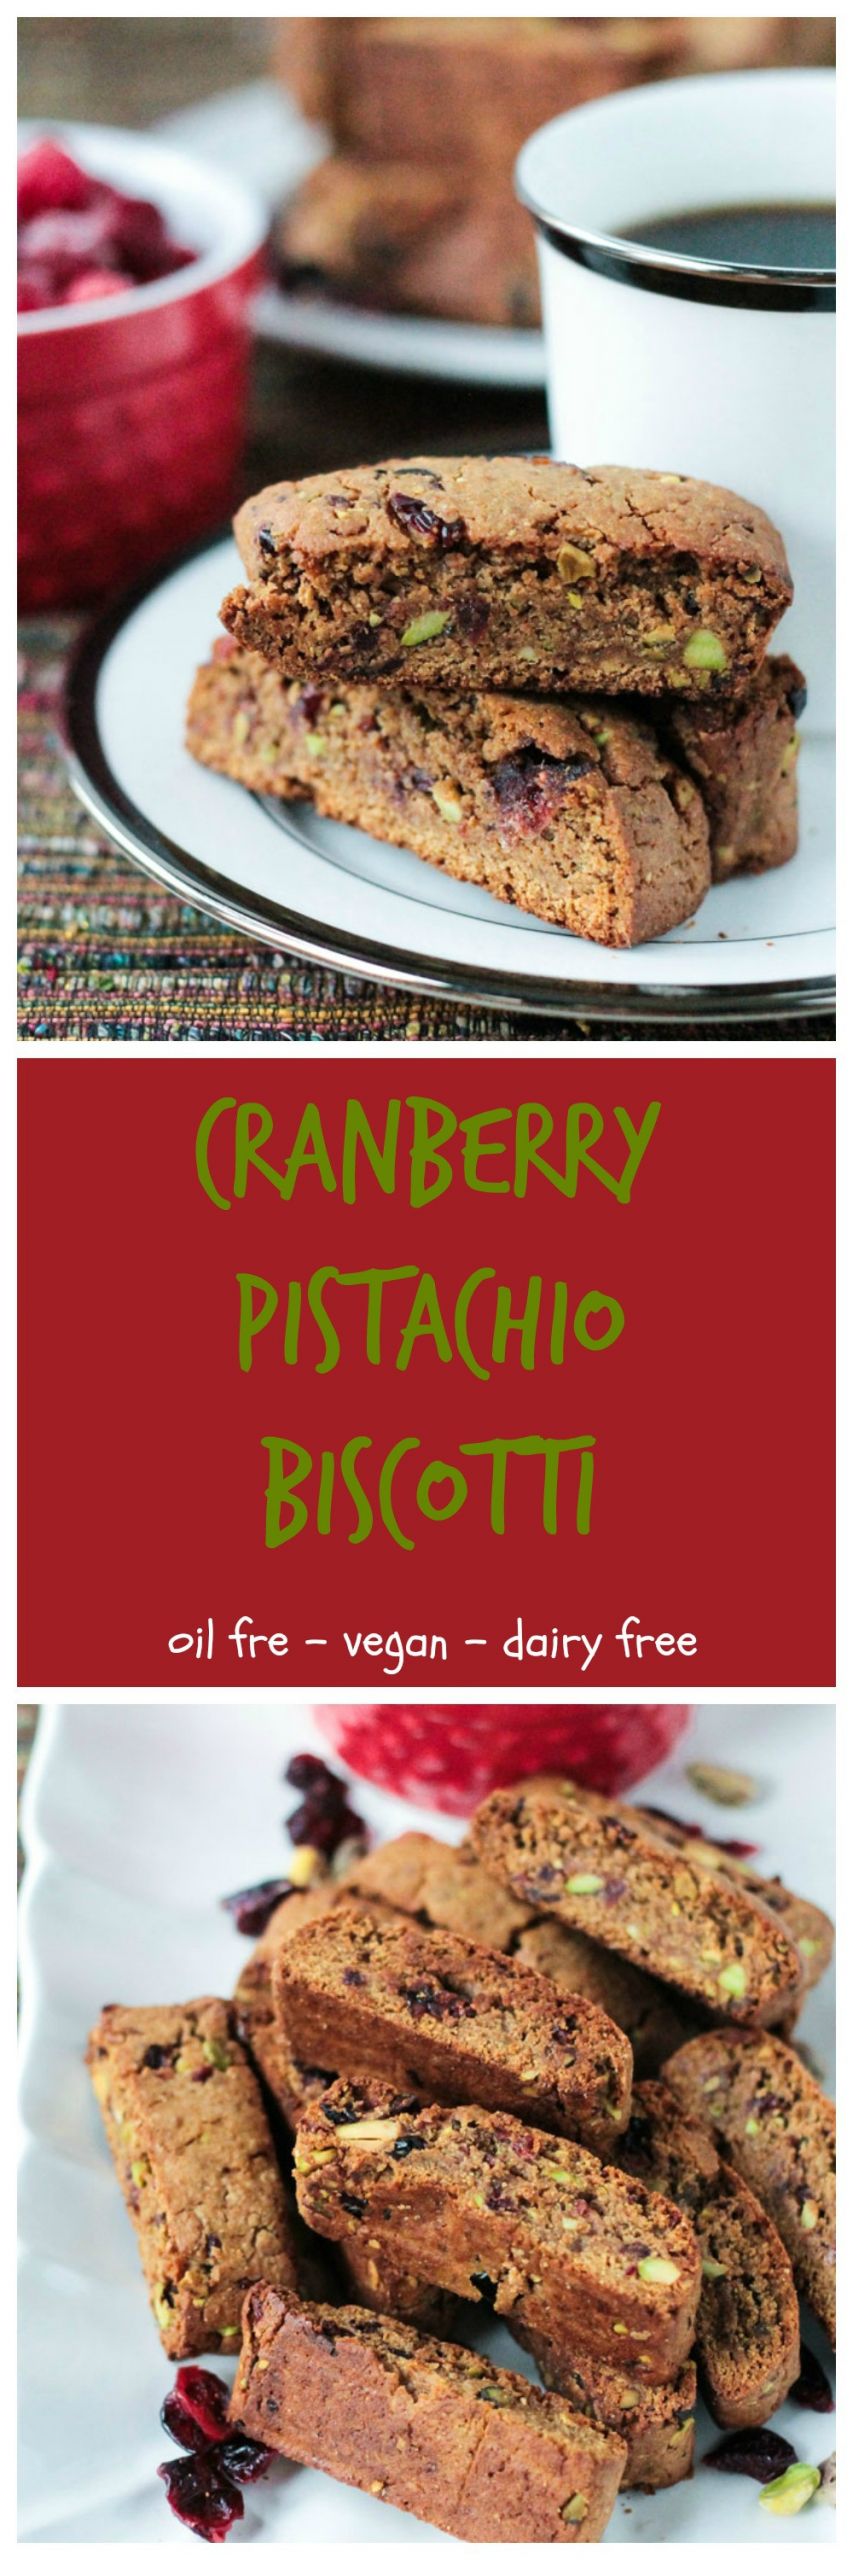 Vegan Biscotti Recipes
 Whole Wheat Cranberry Pistachio Vegan Biscotti